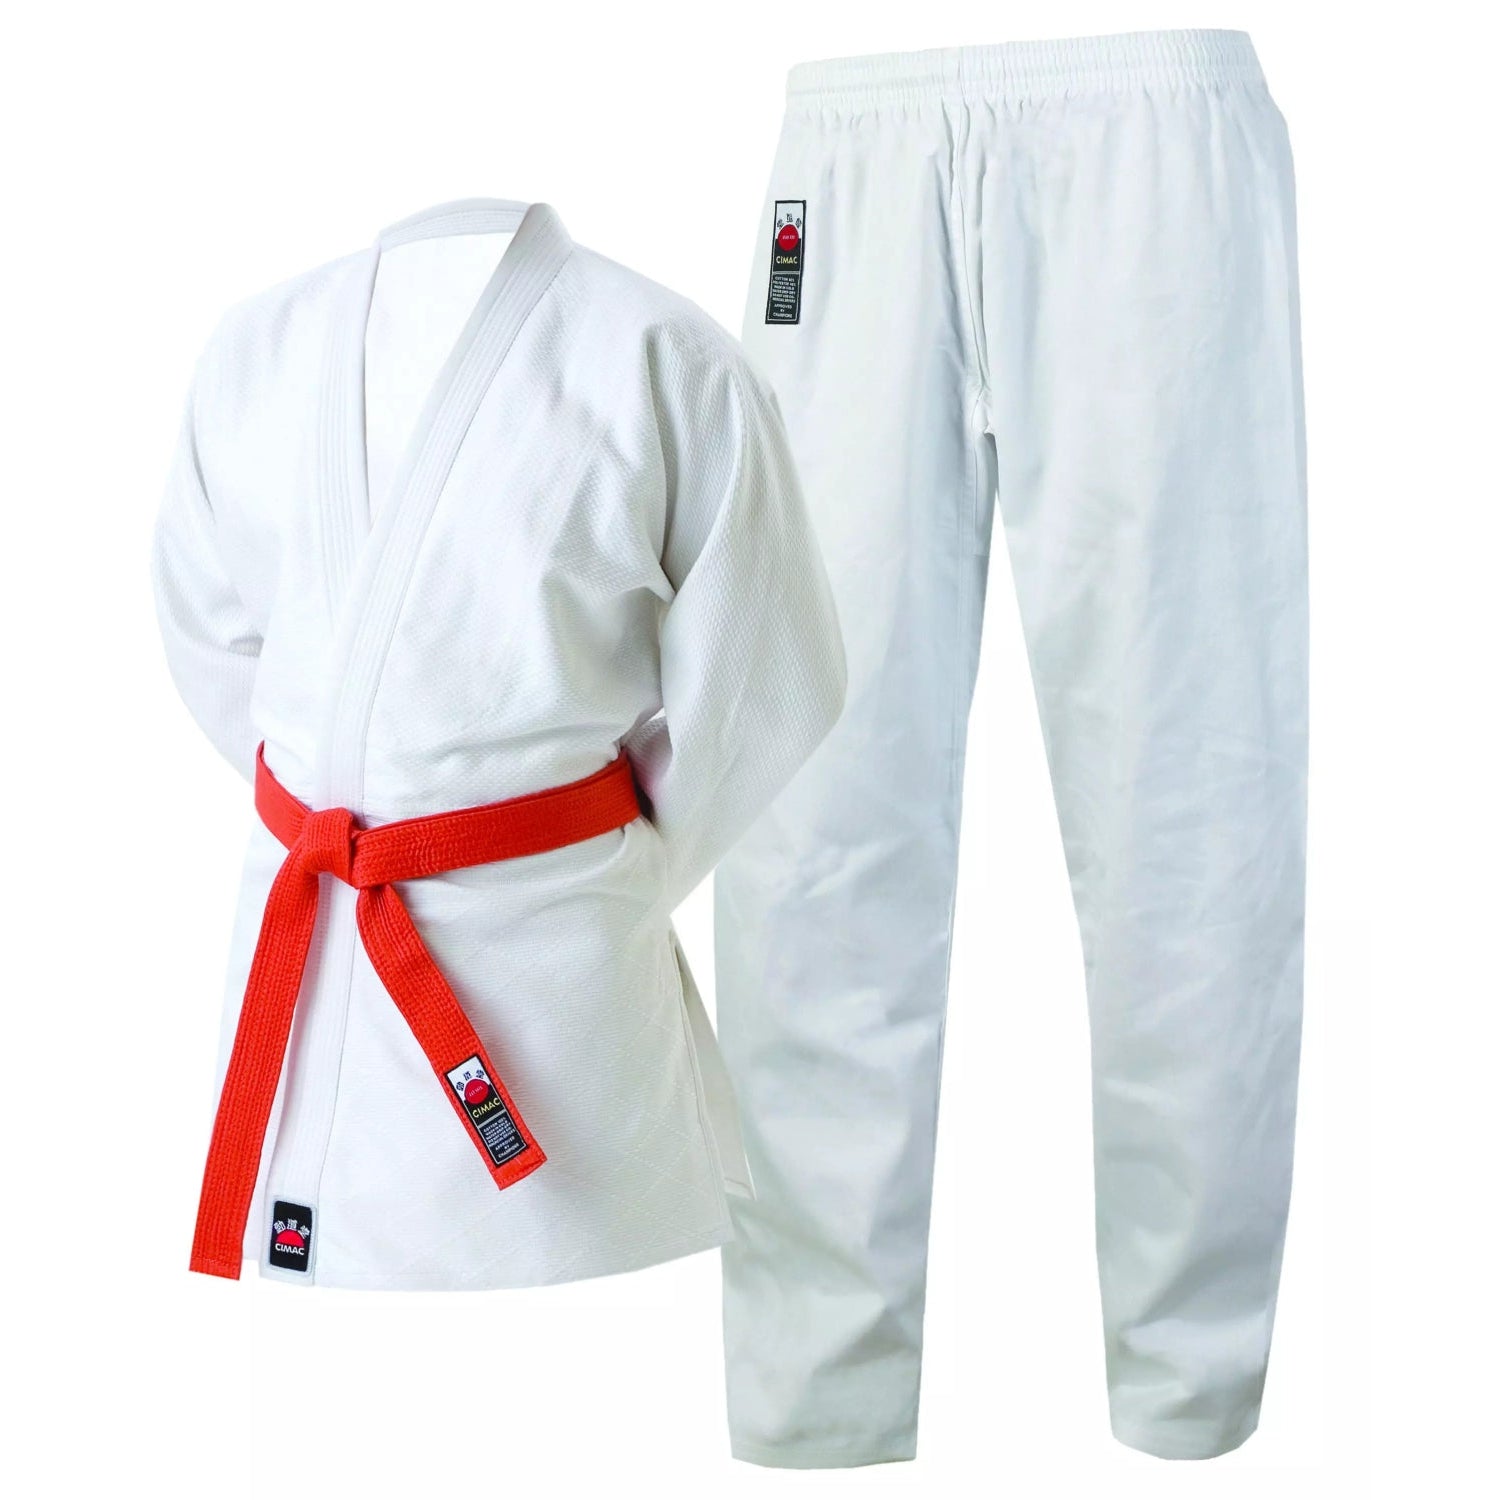 Cimac Judo Gi Suit 13oz Kids & Adult Uniform White Belt